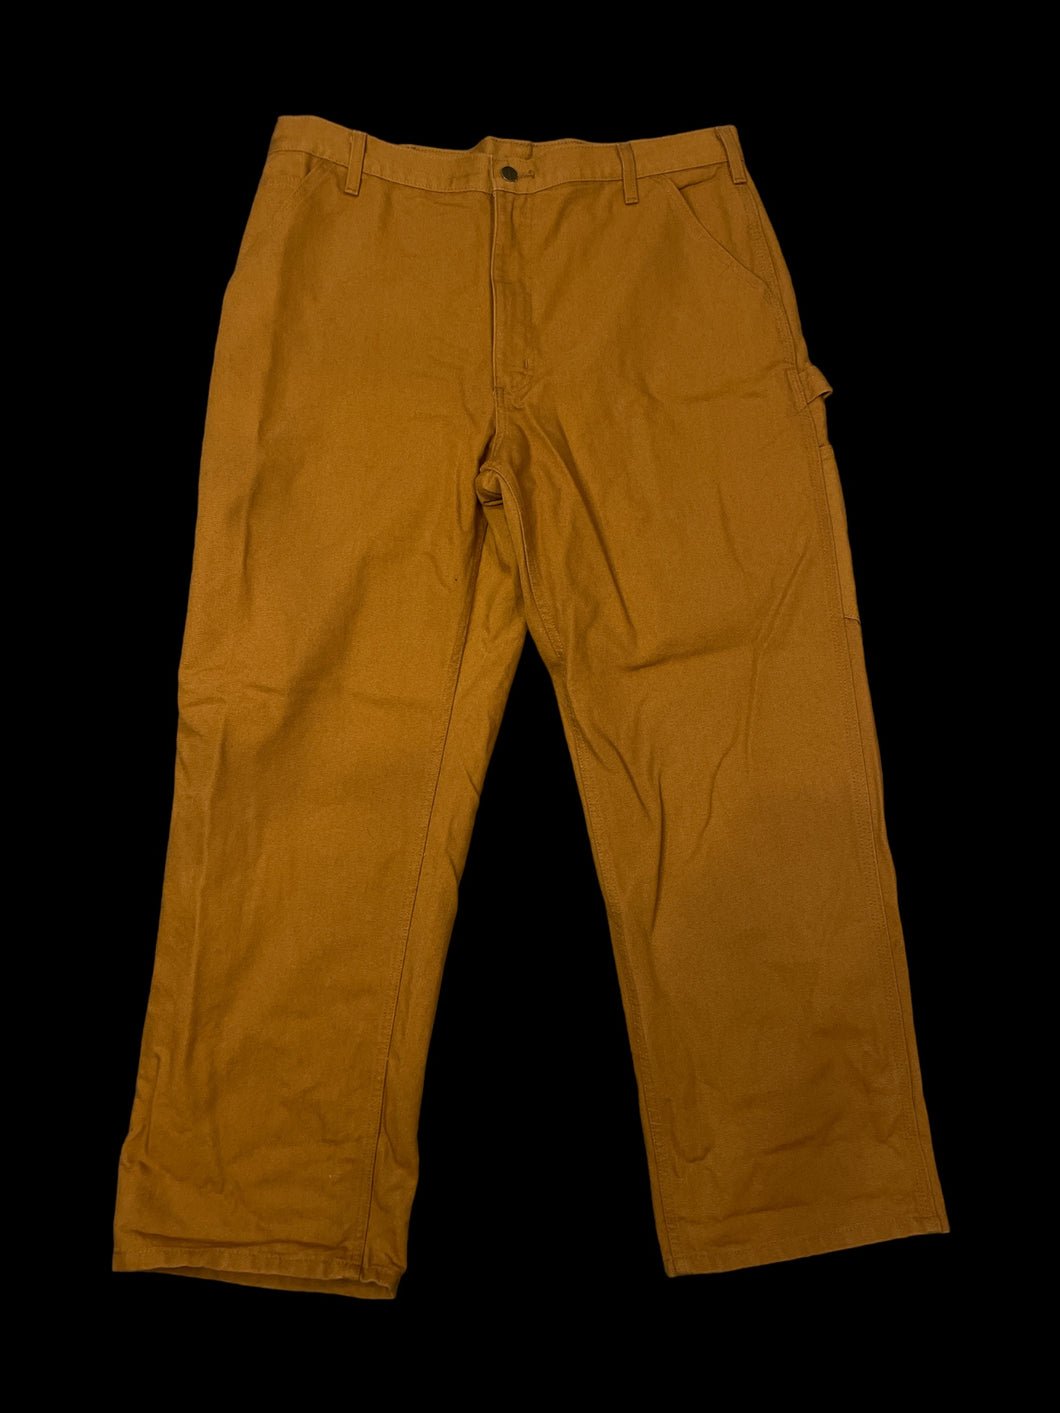 XL Dijon brown Carhartt cotton canvas carpenter pants w/ belt loops, tool pocket/loop, pockets, & button/zipper closure